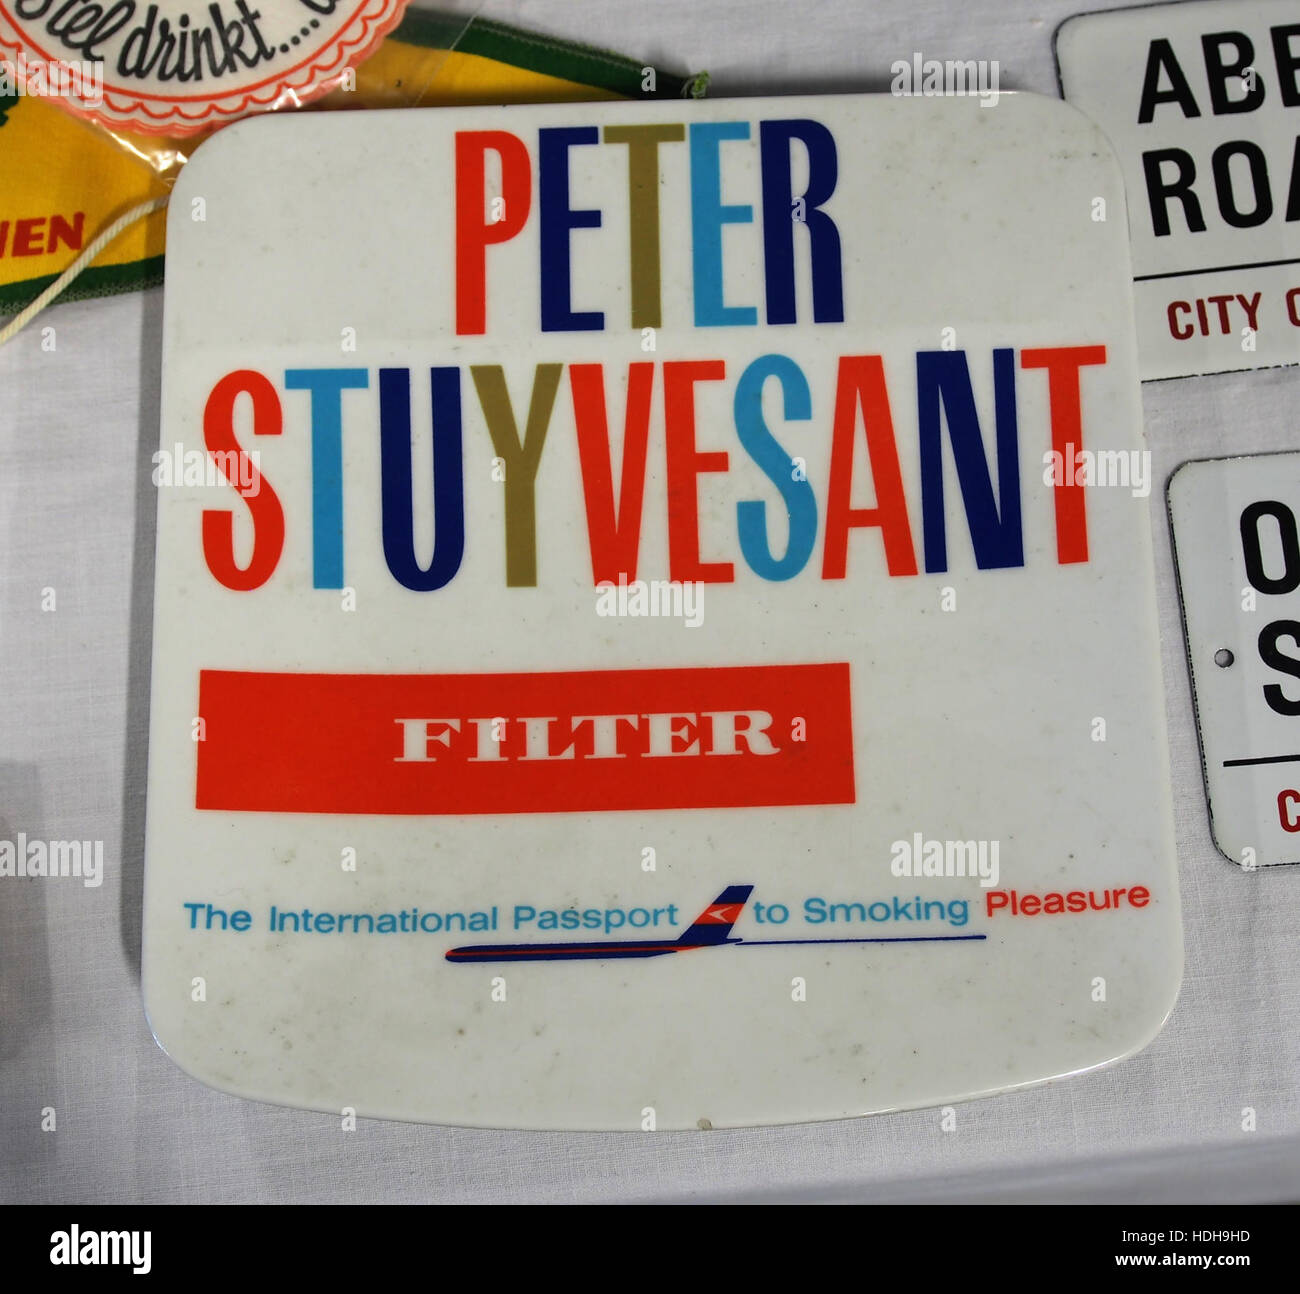 Peter Stuyvesant betaalbordje pic2 Foto Stock